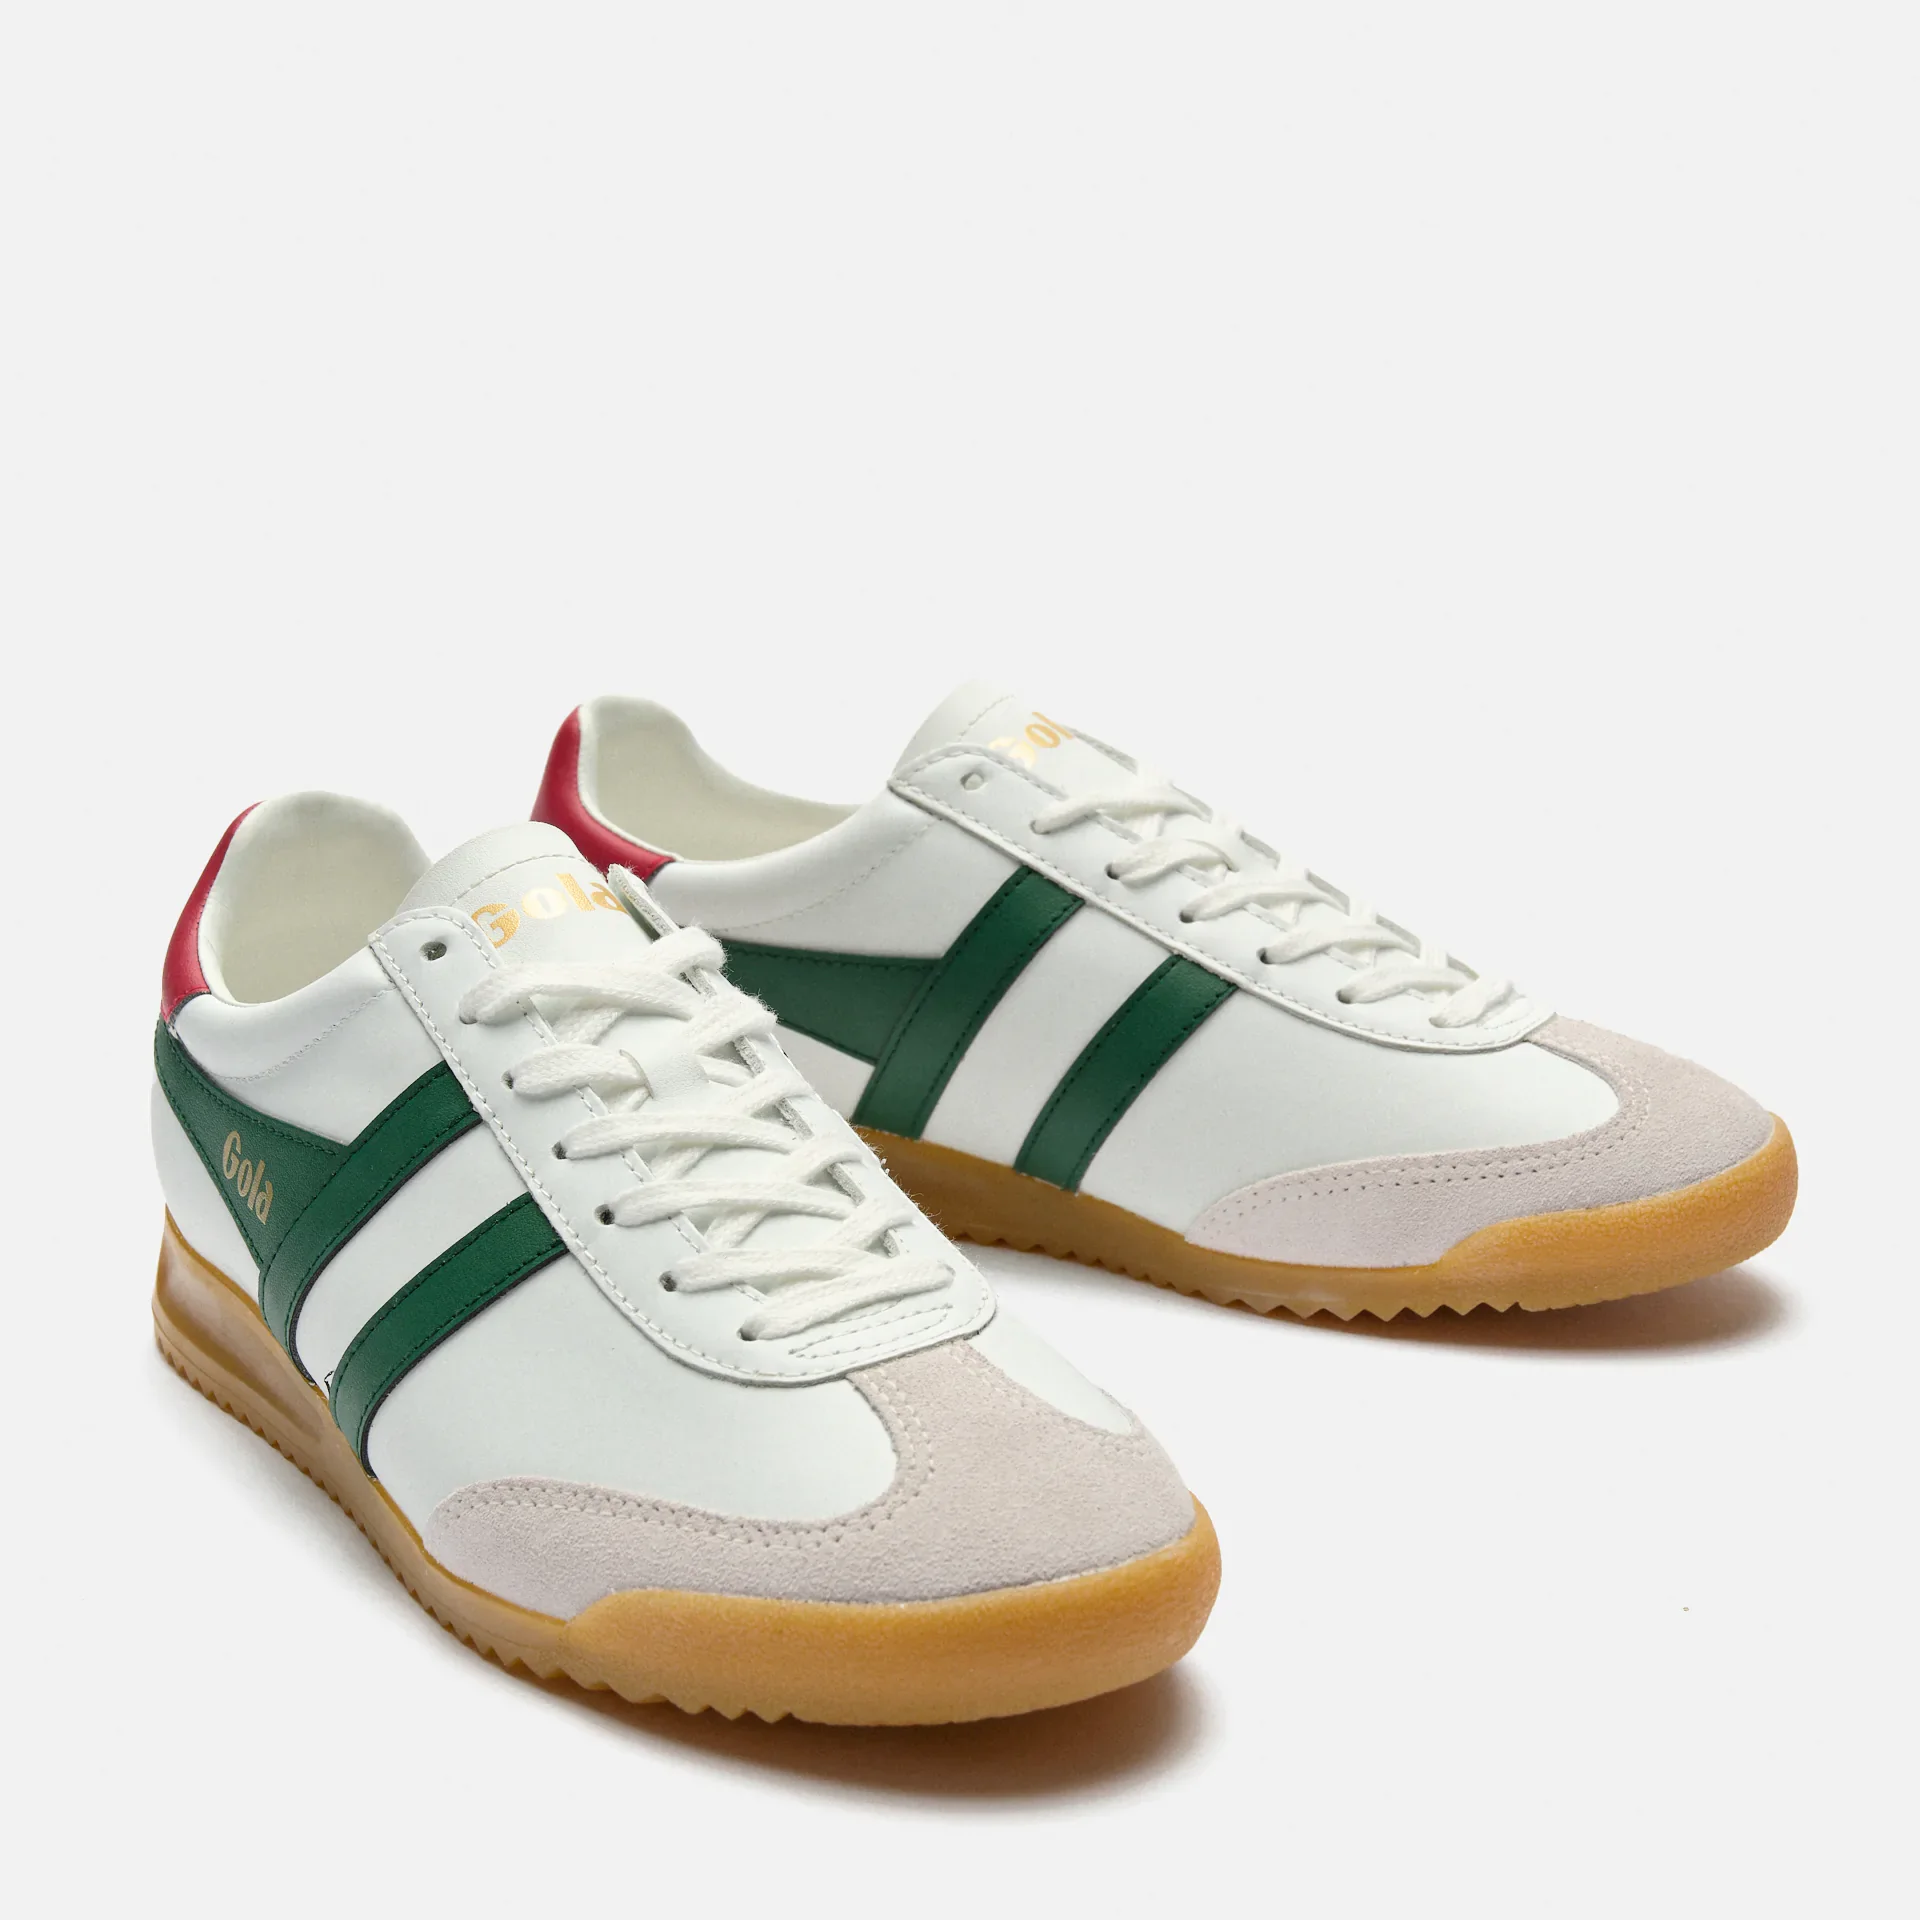 Gola Torpedo Leather Sneaker White/Evergreen/Deep Red